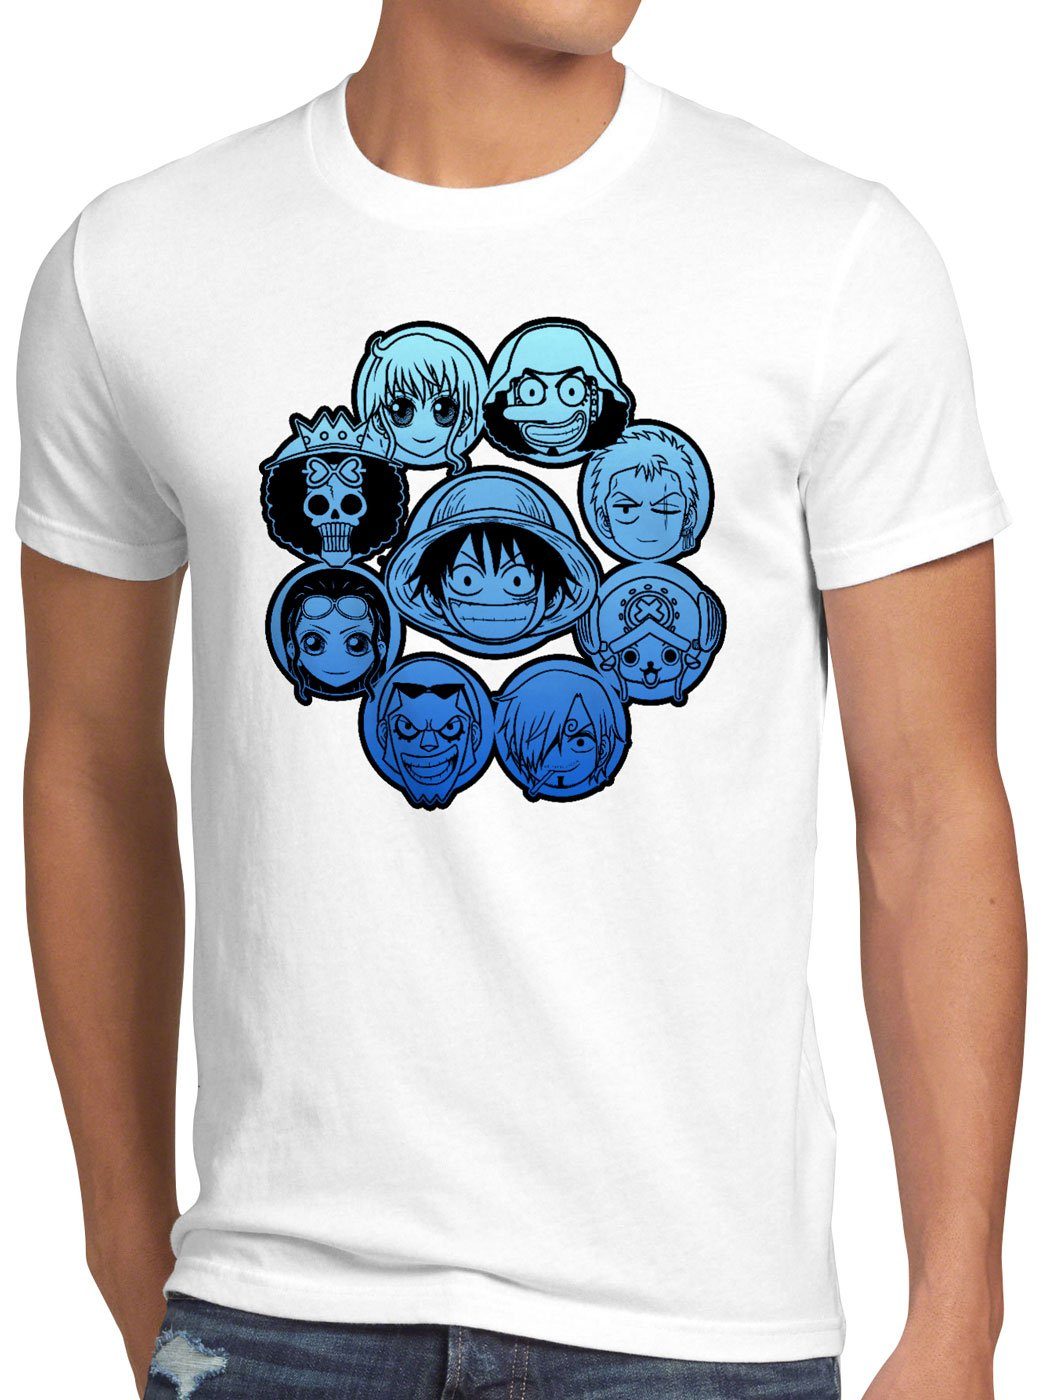 nami Piratenbande Ruffy lysop Sanji Herren T-Shirt blau style3 Zorro Print-Shirt